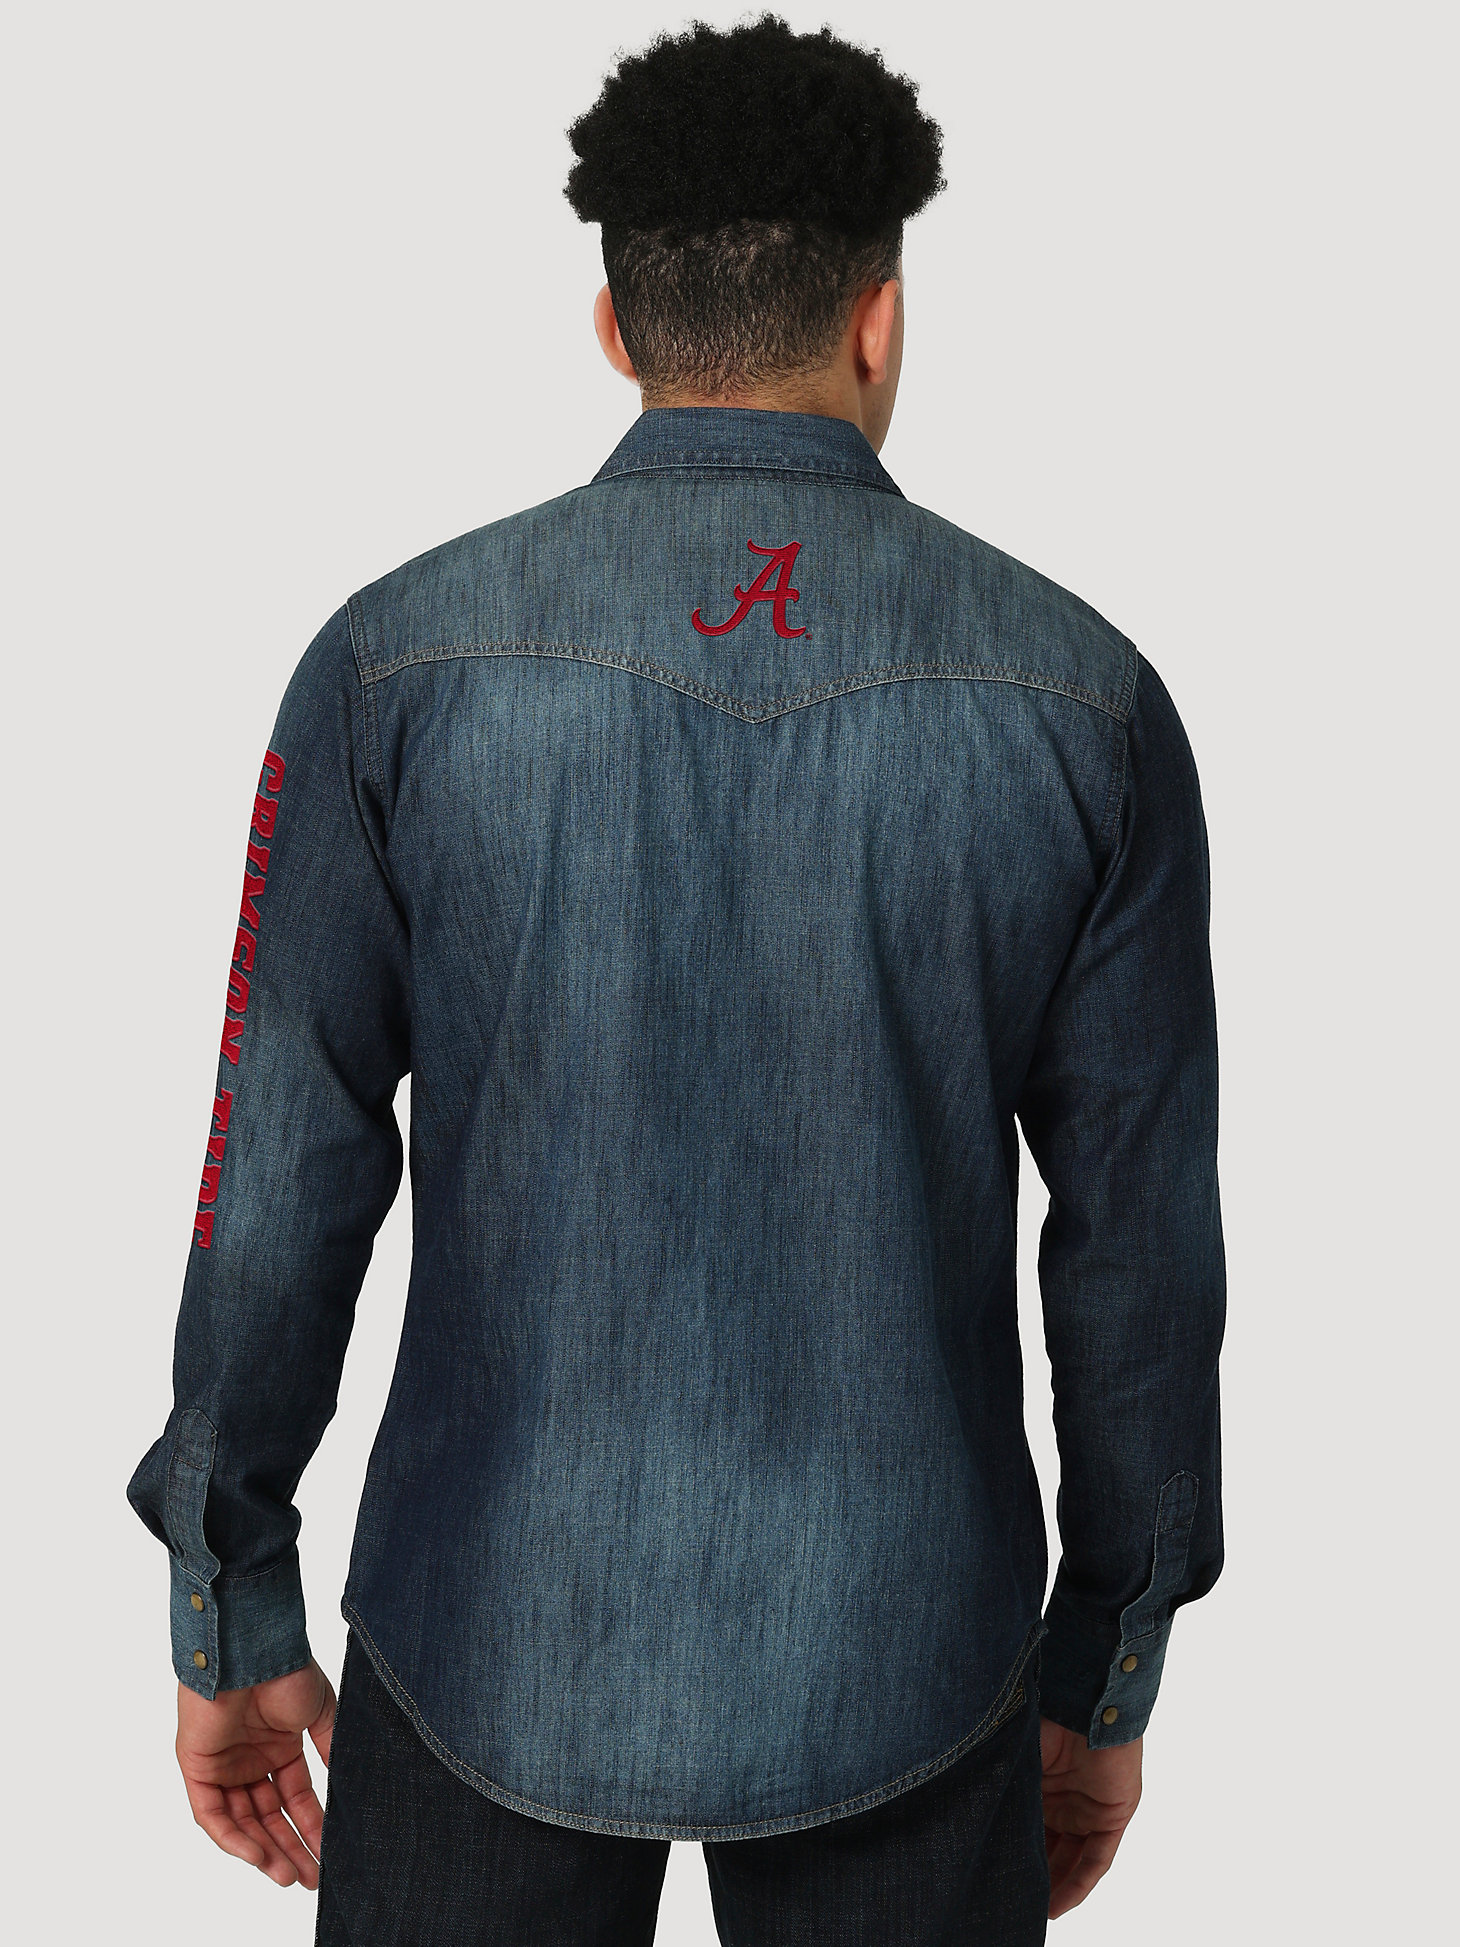 Men's Wrangler Collegiate Denim Western Snap Shirt in University of Alabama alternative view 1